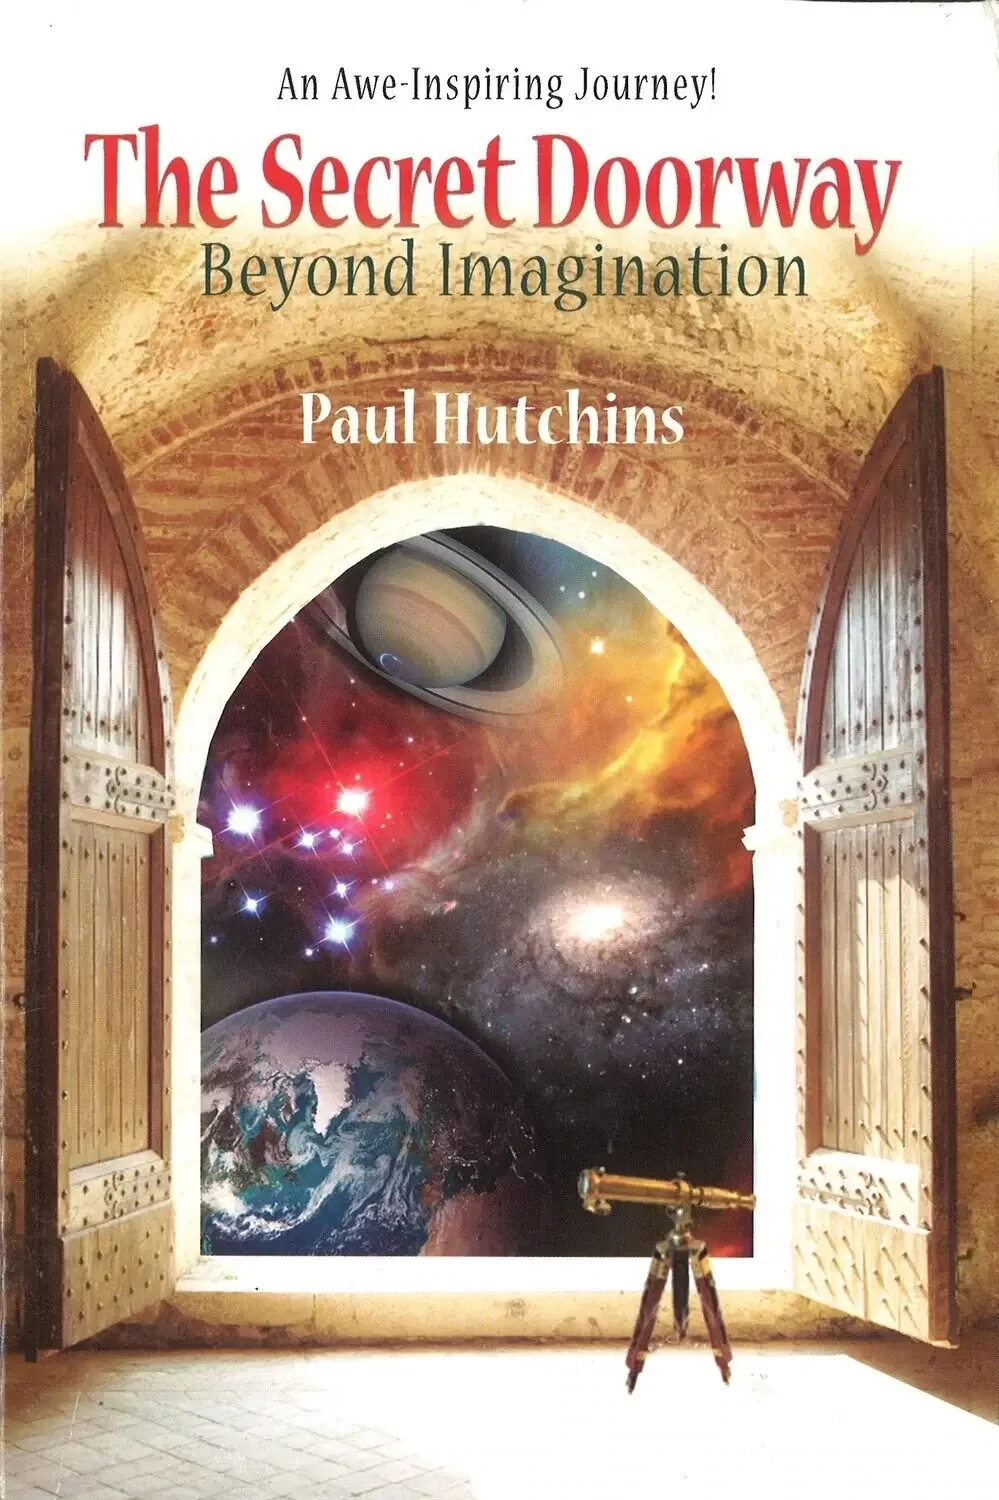 The Secret Doorway: Beyond Imagination, Paul Hutchins